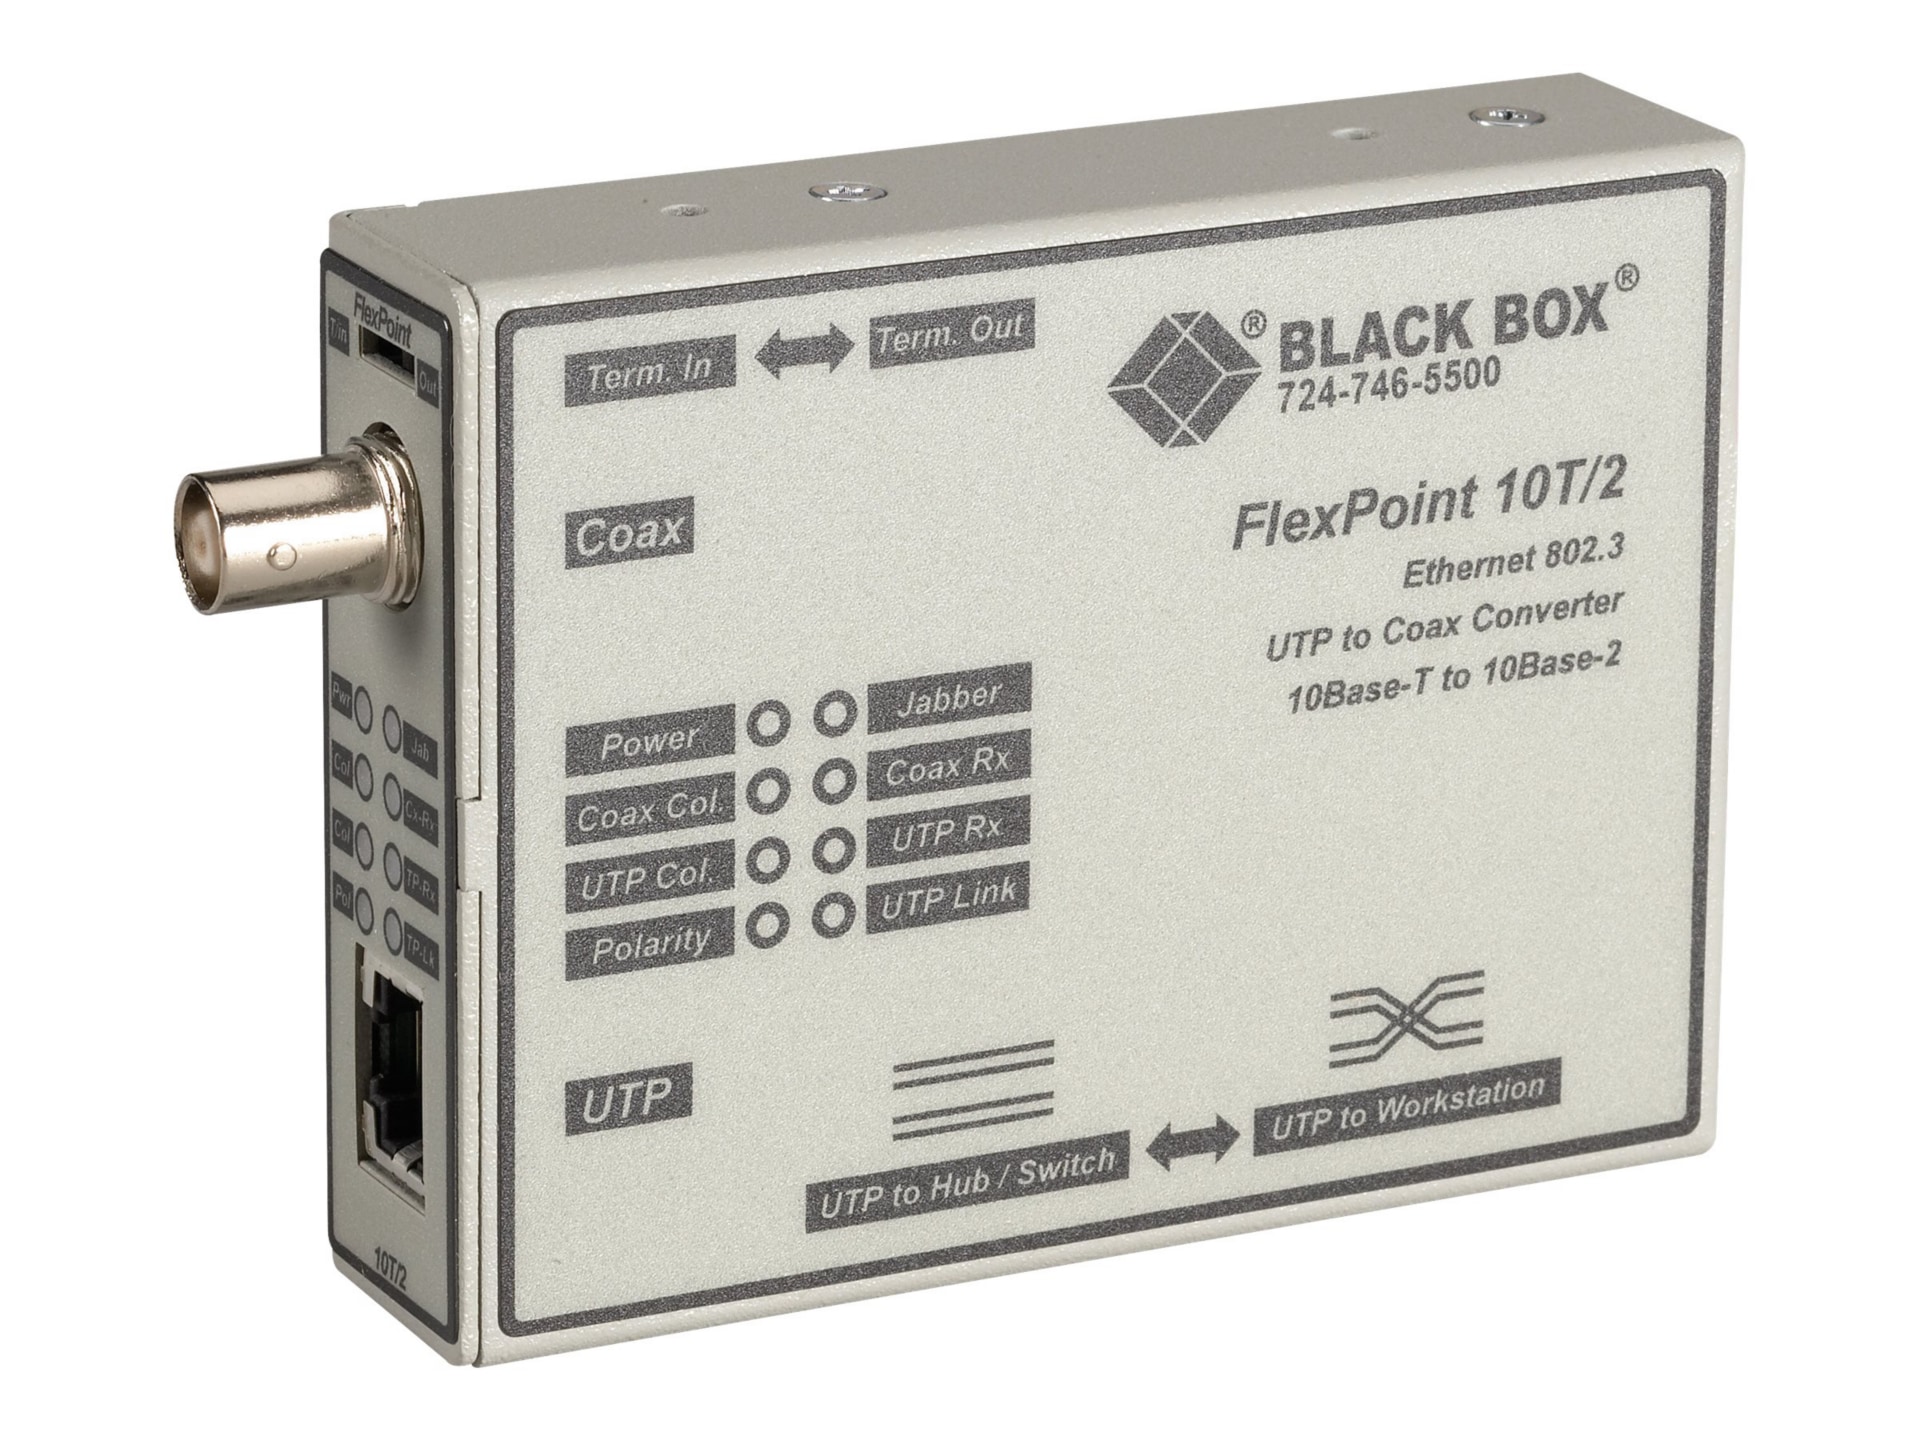 Black Box - Transceiver - 10Base-T, 10Base-2 (Coax) - for FlexPoint